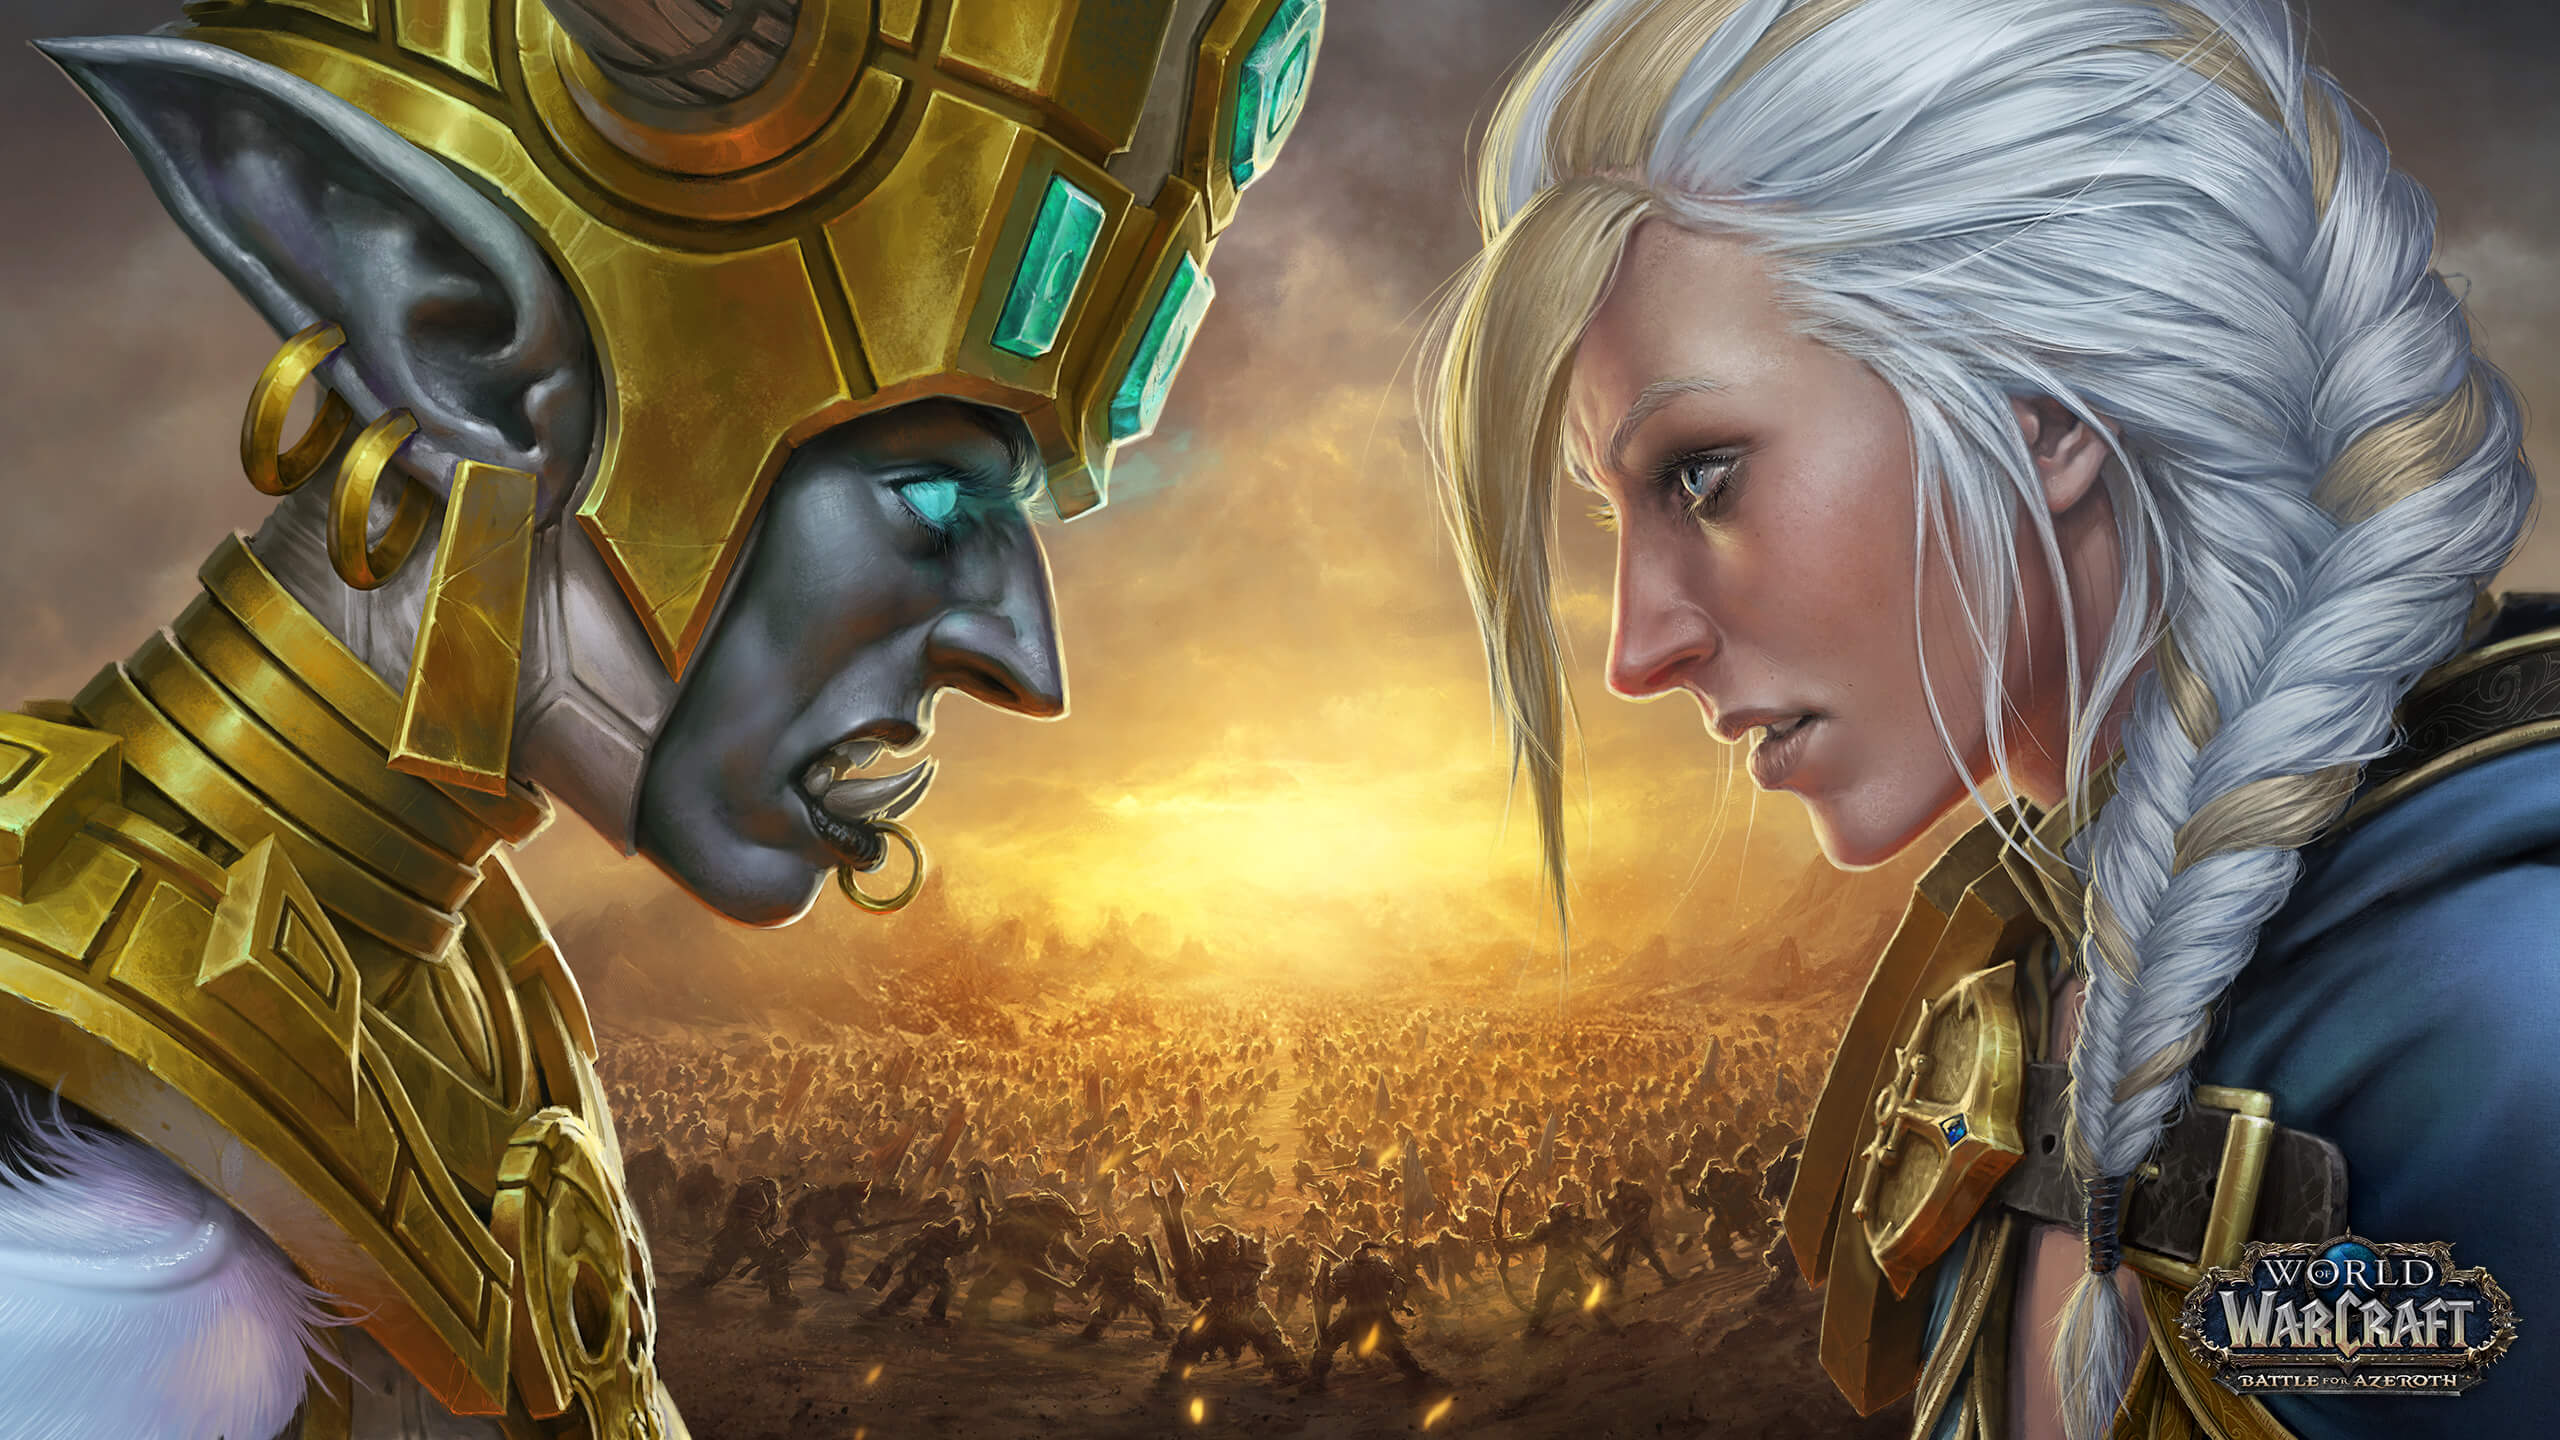 World of Warcraft backgrounds